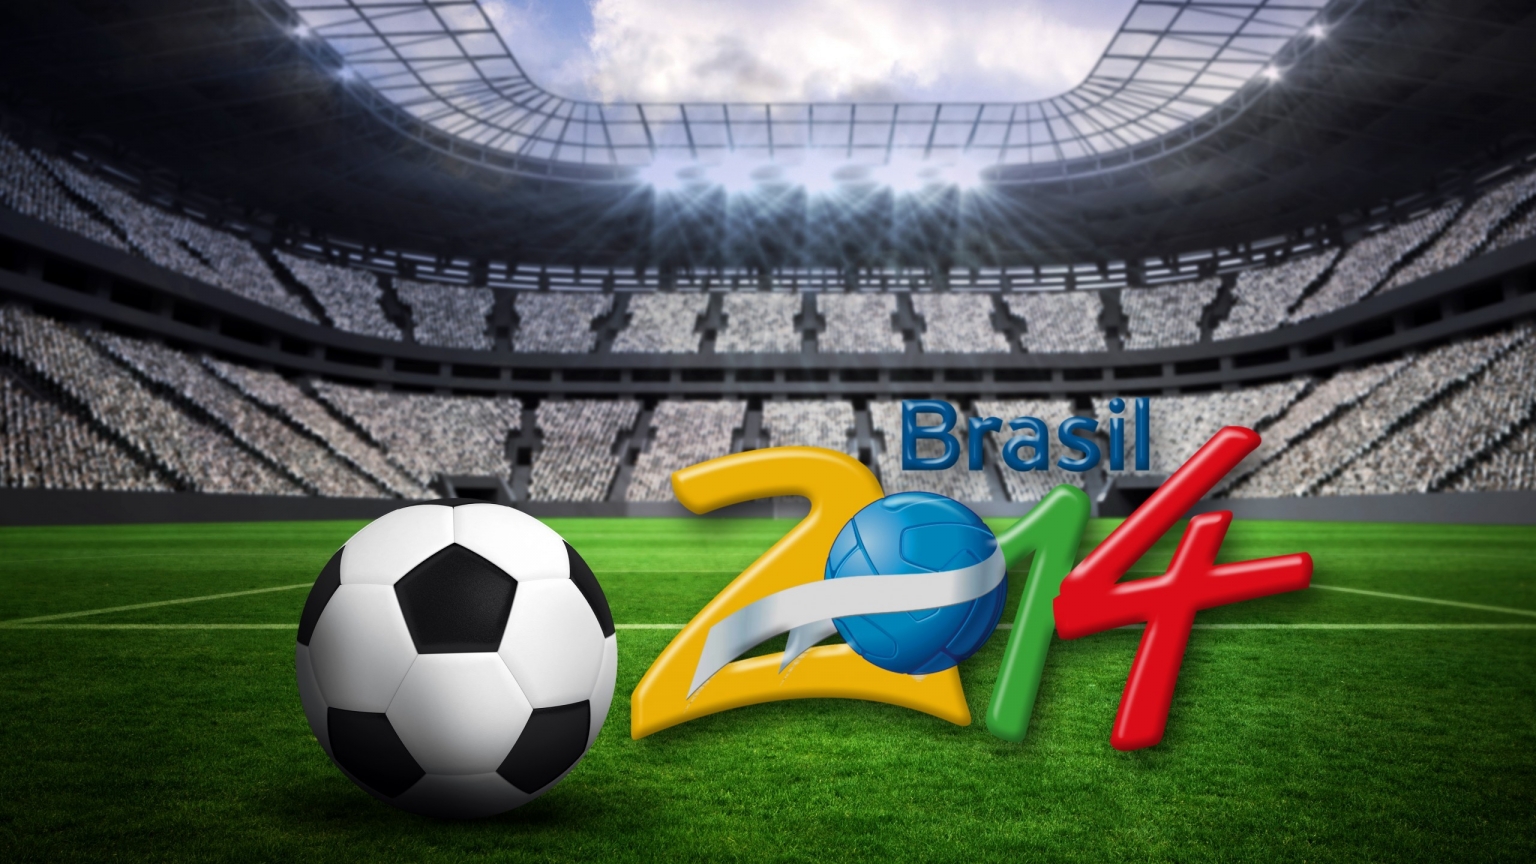 Brasil World Cup 2014 for 1536 x 864 HDTV resolution